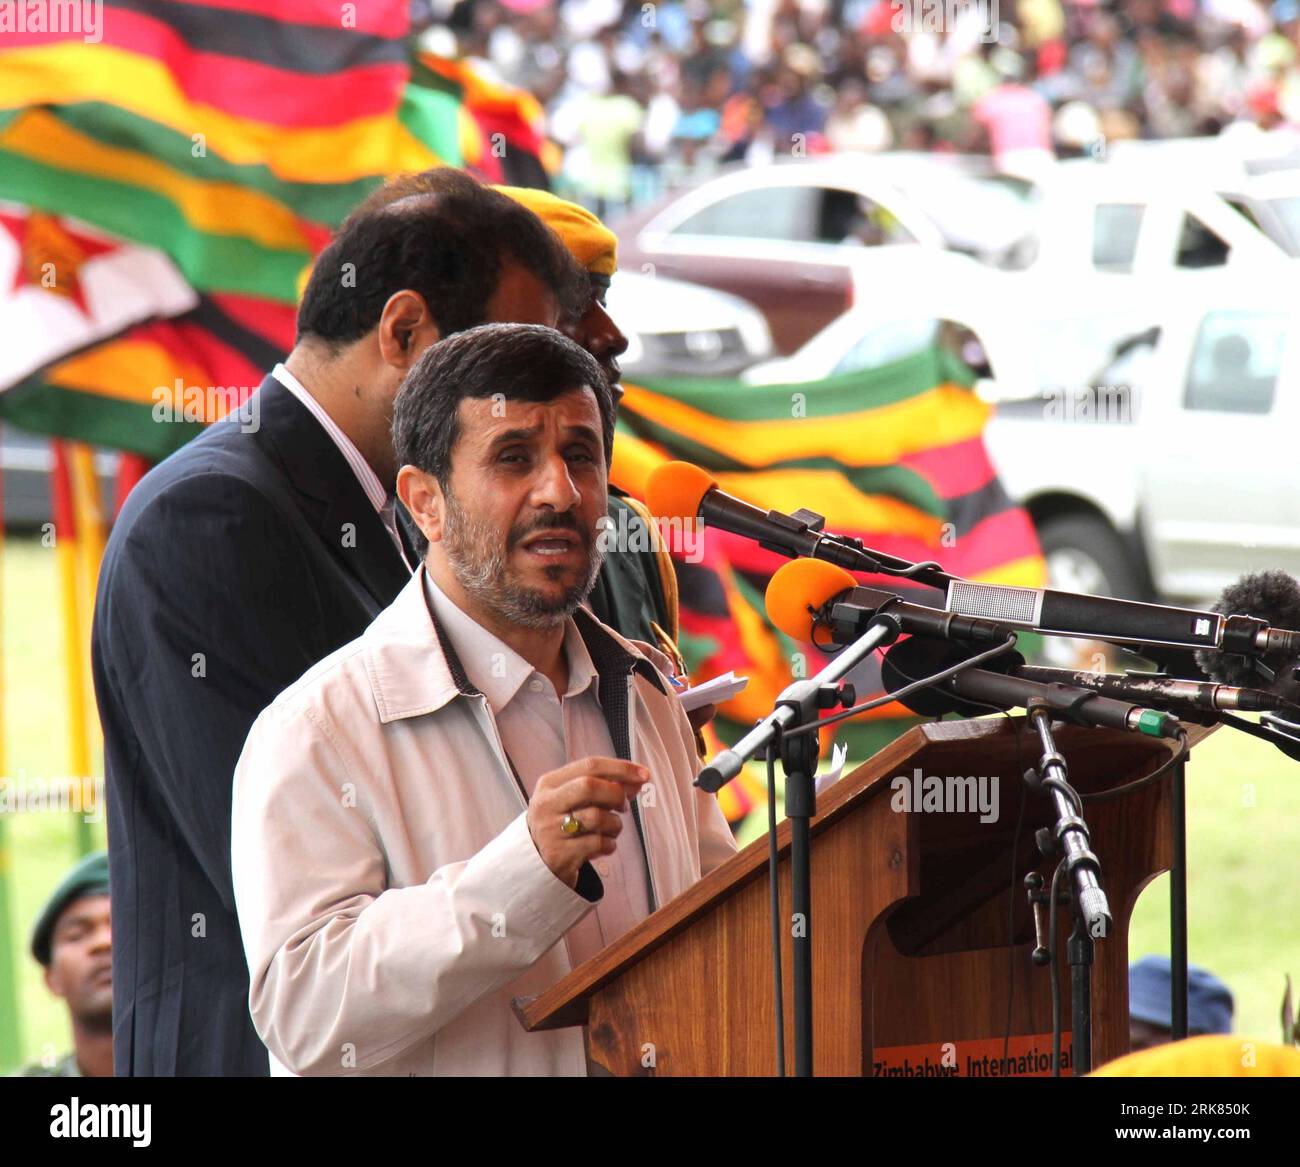 Bildnummer: 53971871  Datum: 22.04.2010  Copyright: imago/Xinhua (100423) -- HARARE, April 23, 2010 (Xinhua) -- Visiting Iranian President Mahmoud Ahmadinejad delivers a speech at the opening of the Zimbabwe International Trade Fair in Bulawayo, Zimbabwe on April 23, 2010. Mahmoud Ahmadinejad arrived in Zimbabwe s capital city Harare on April 22 for a two-day state visit. (Xinhua/Li Ping) (lx) (3)ZIMBABWE-IRANIAN PRESIDENT-VISIT PUBLICATIONxNOTxINxCHN People Politik Iran premiumd xint kbdig xcb 2010 quadrat     Bildnummer 53971871 Date 22 04 2010 Copyright Imago XINHUA  Harare April 23 2010 XI Stock Photo